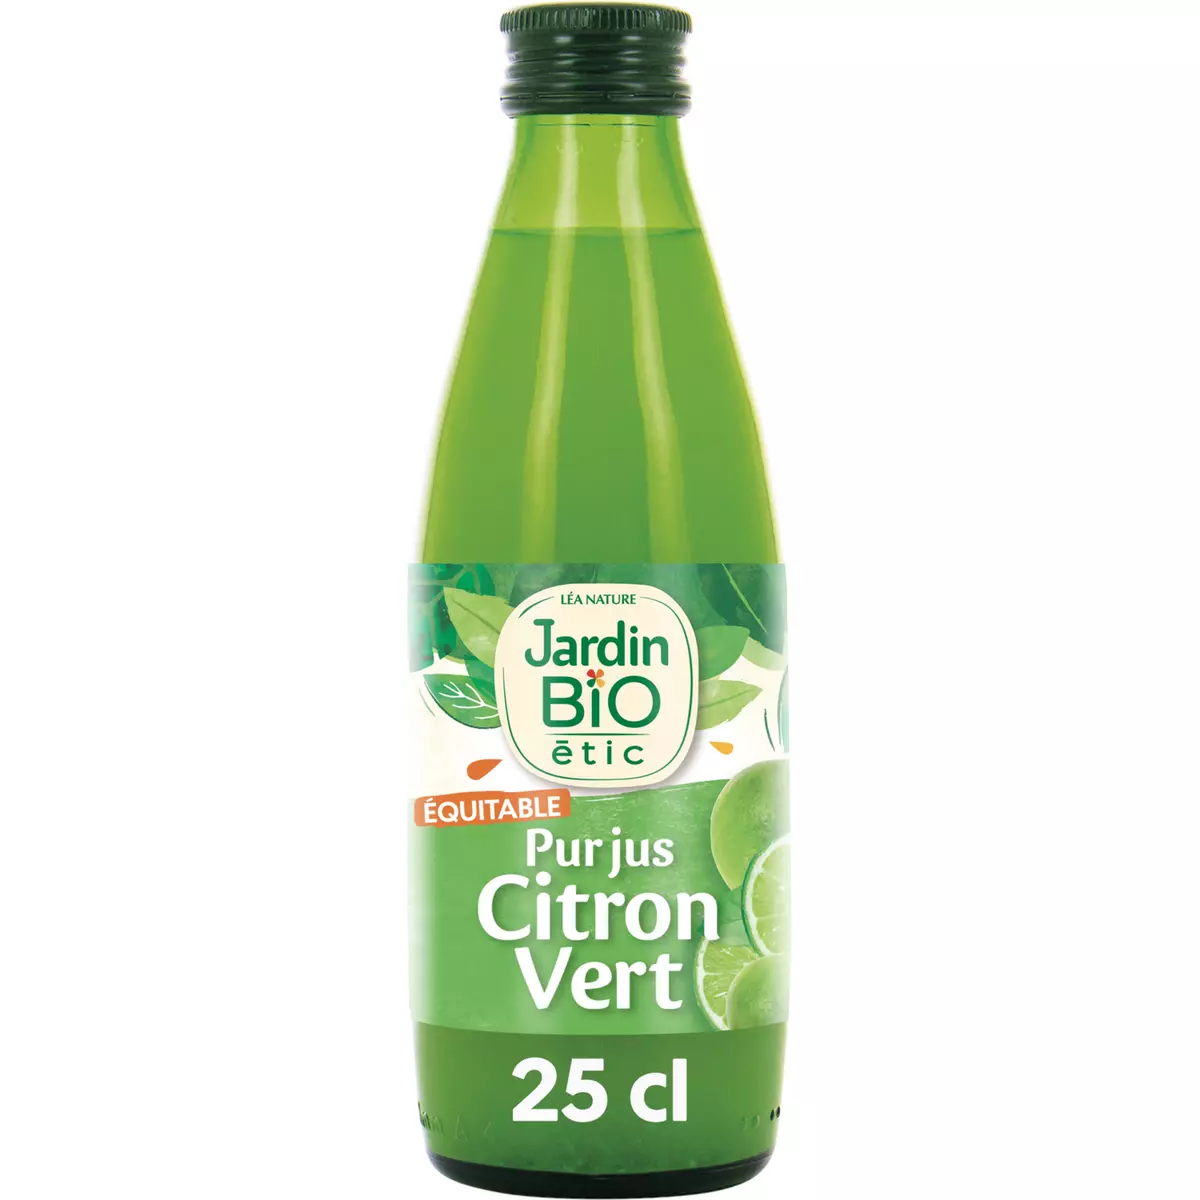 JARDIN BIO ETIC Pur jus de citron vert bio bouteille verre 25cl